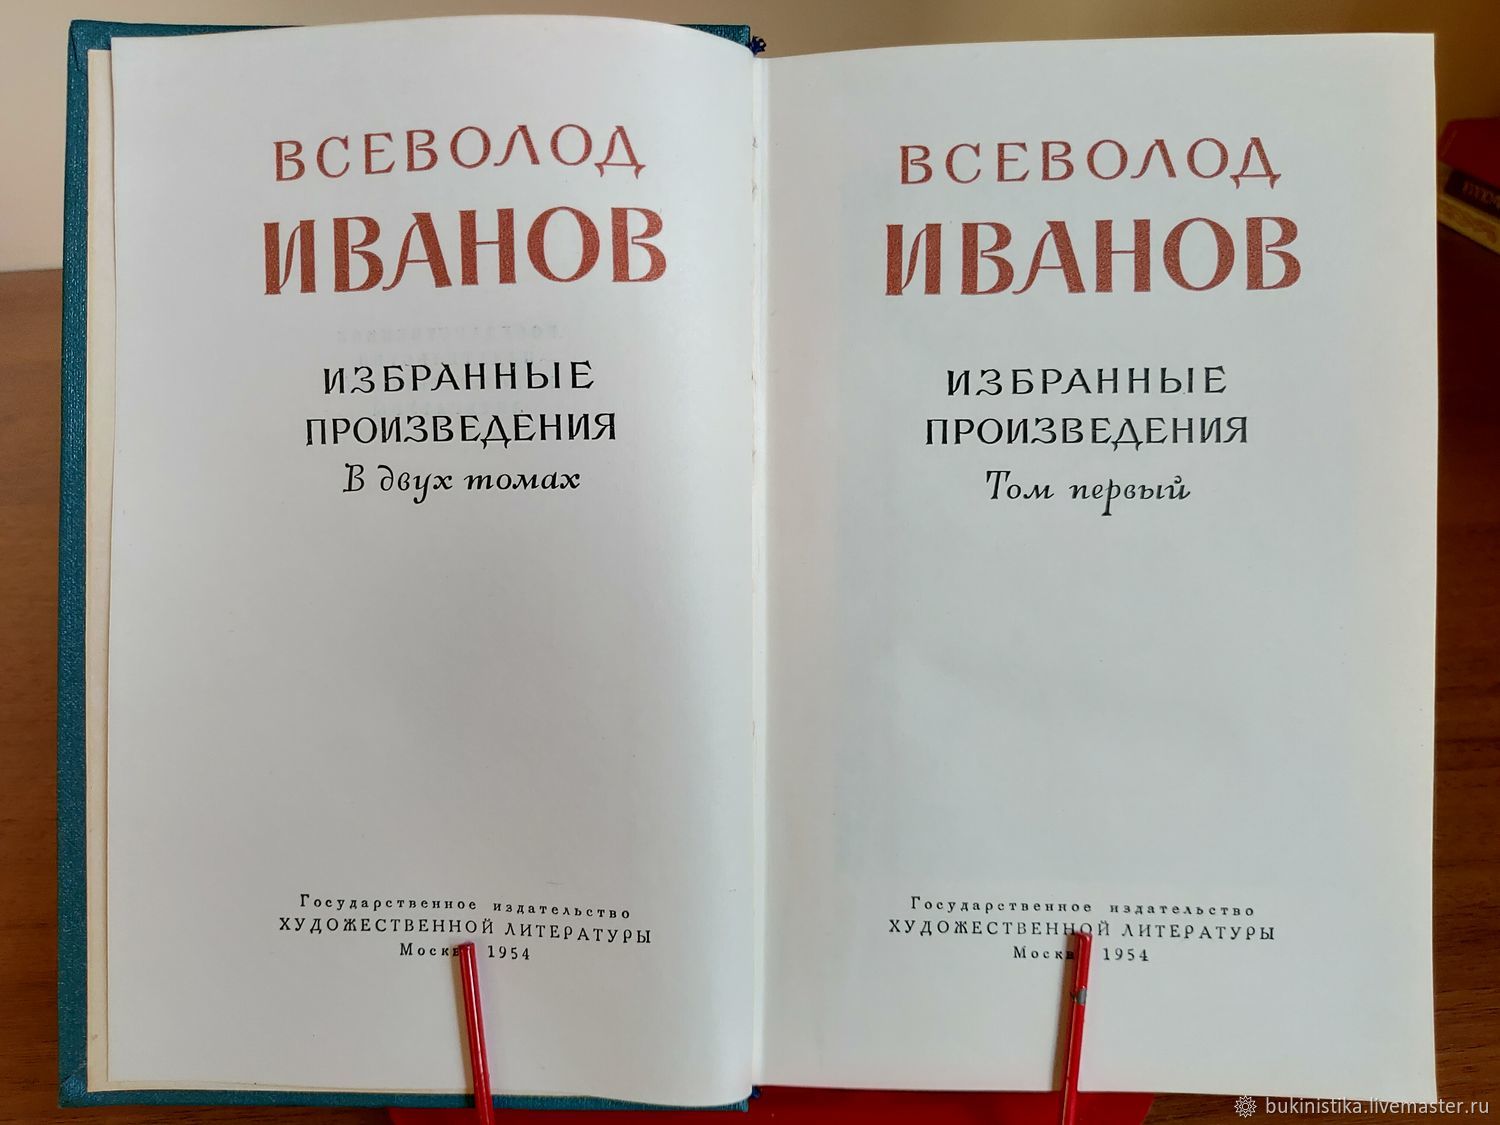 Книга 1954 года. Книги 1954 года. Вс Иванов в 2 томах. Книги 1954 года цена.